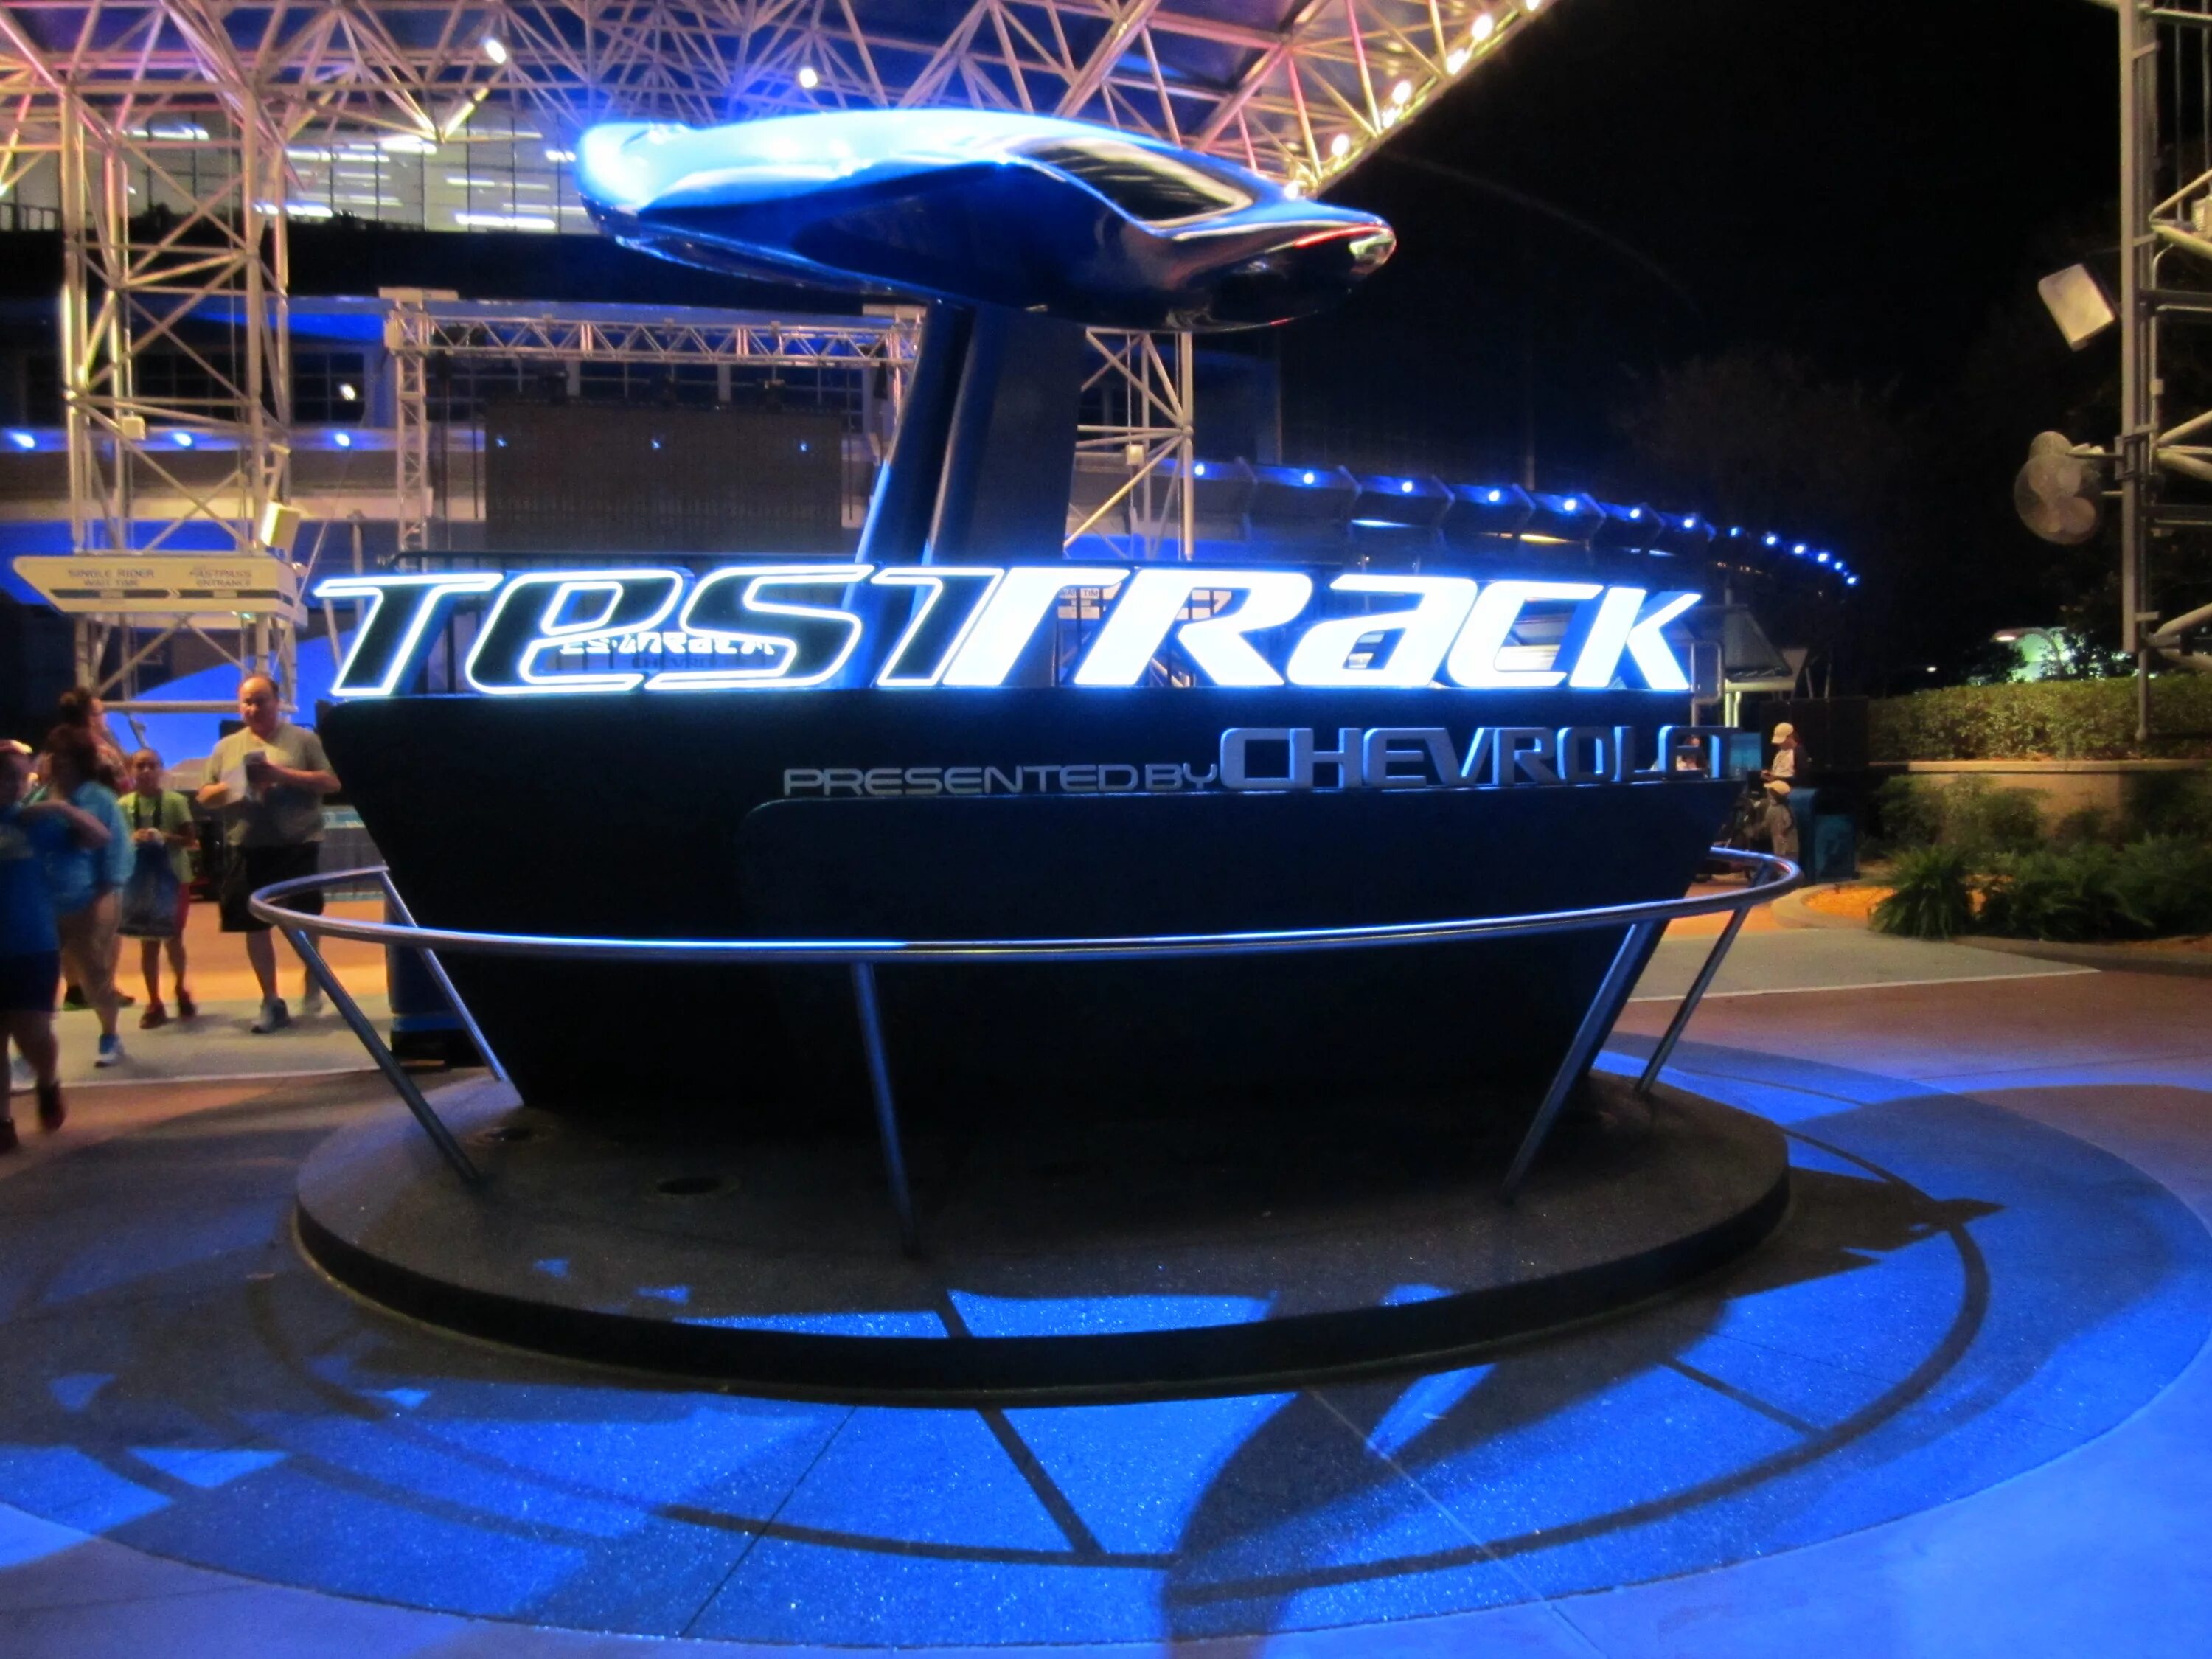 Test track. Test track парк развлечений. Test track Disney. Test track Disney and Chevrolet.